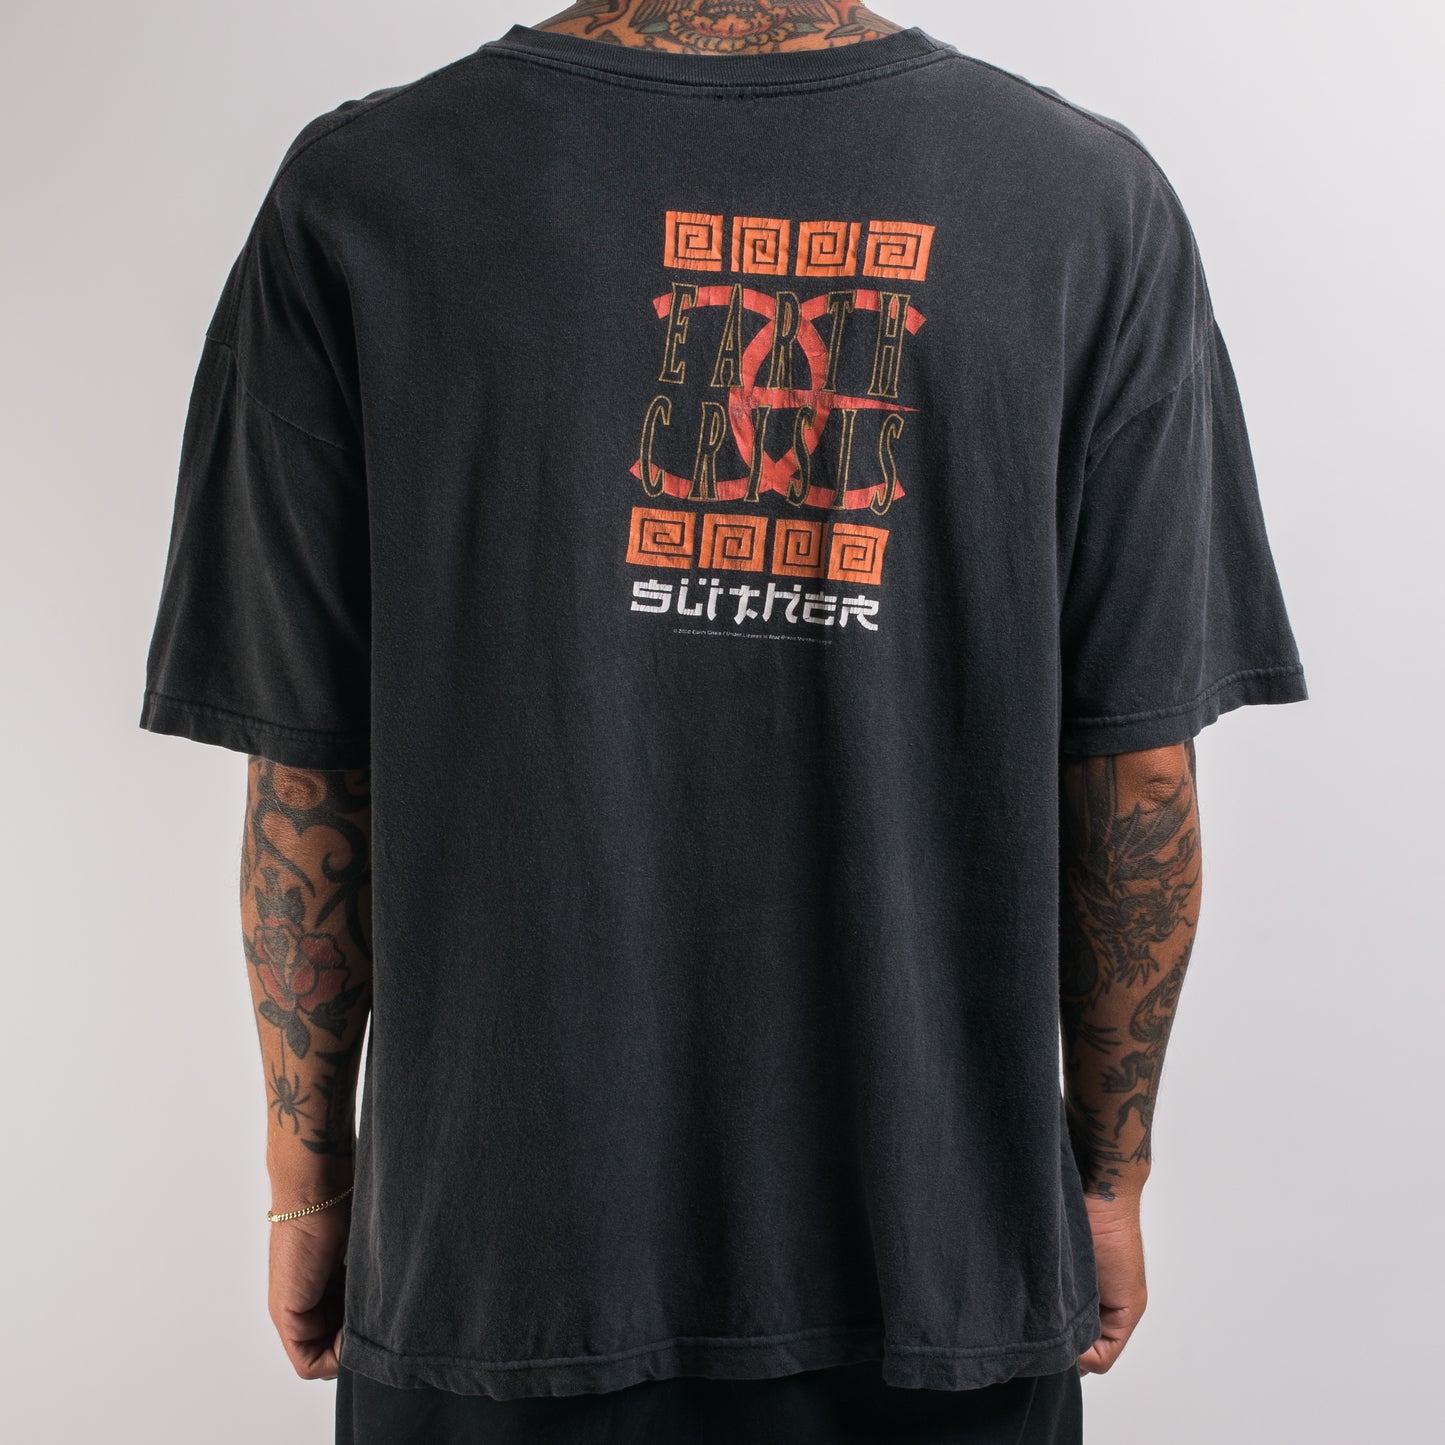 Vintage 2000 Earth Crisis Slither T-Shirt